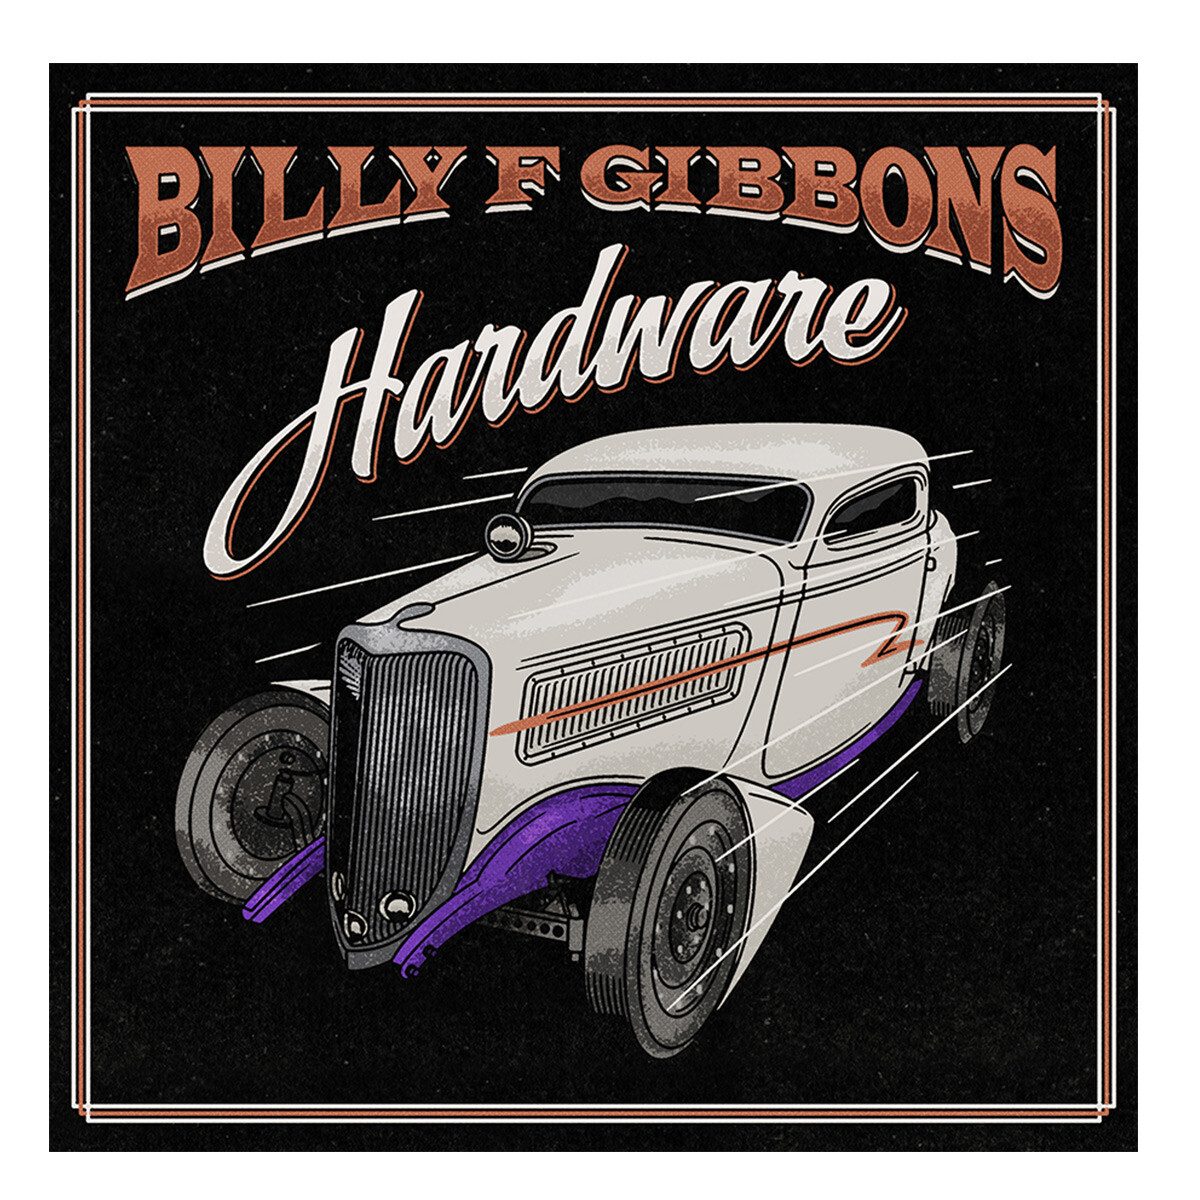 Gibbons, Billy F- Hardware 